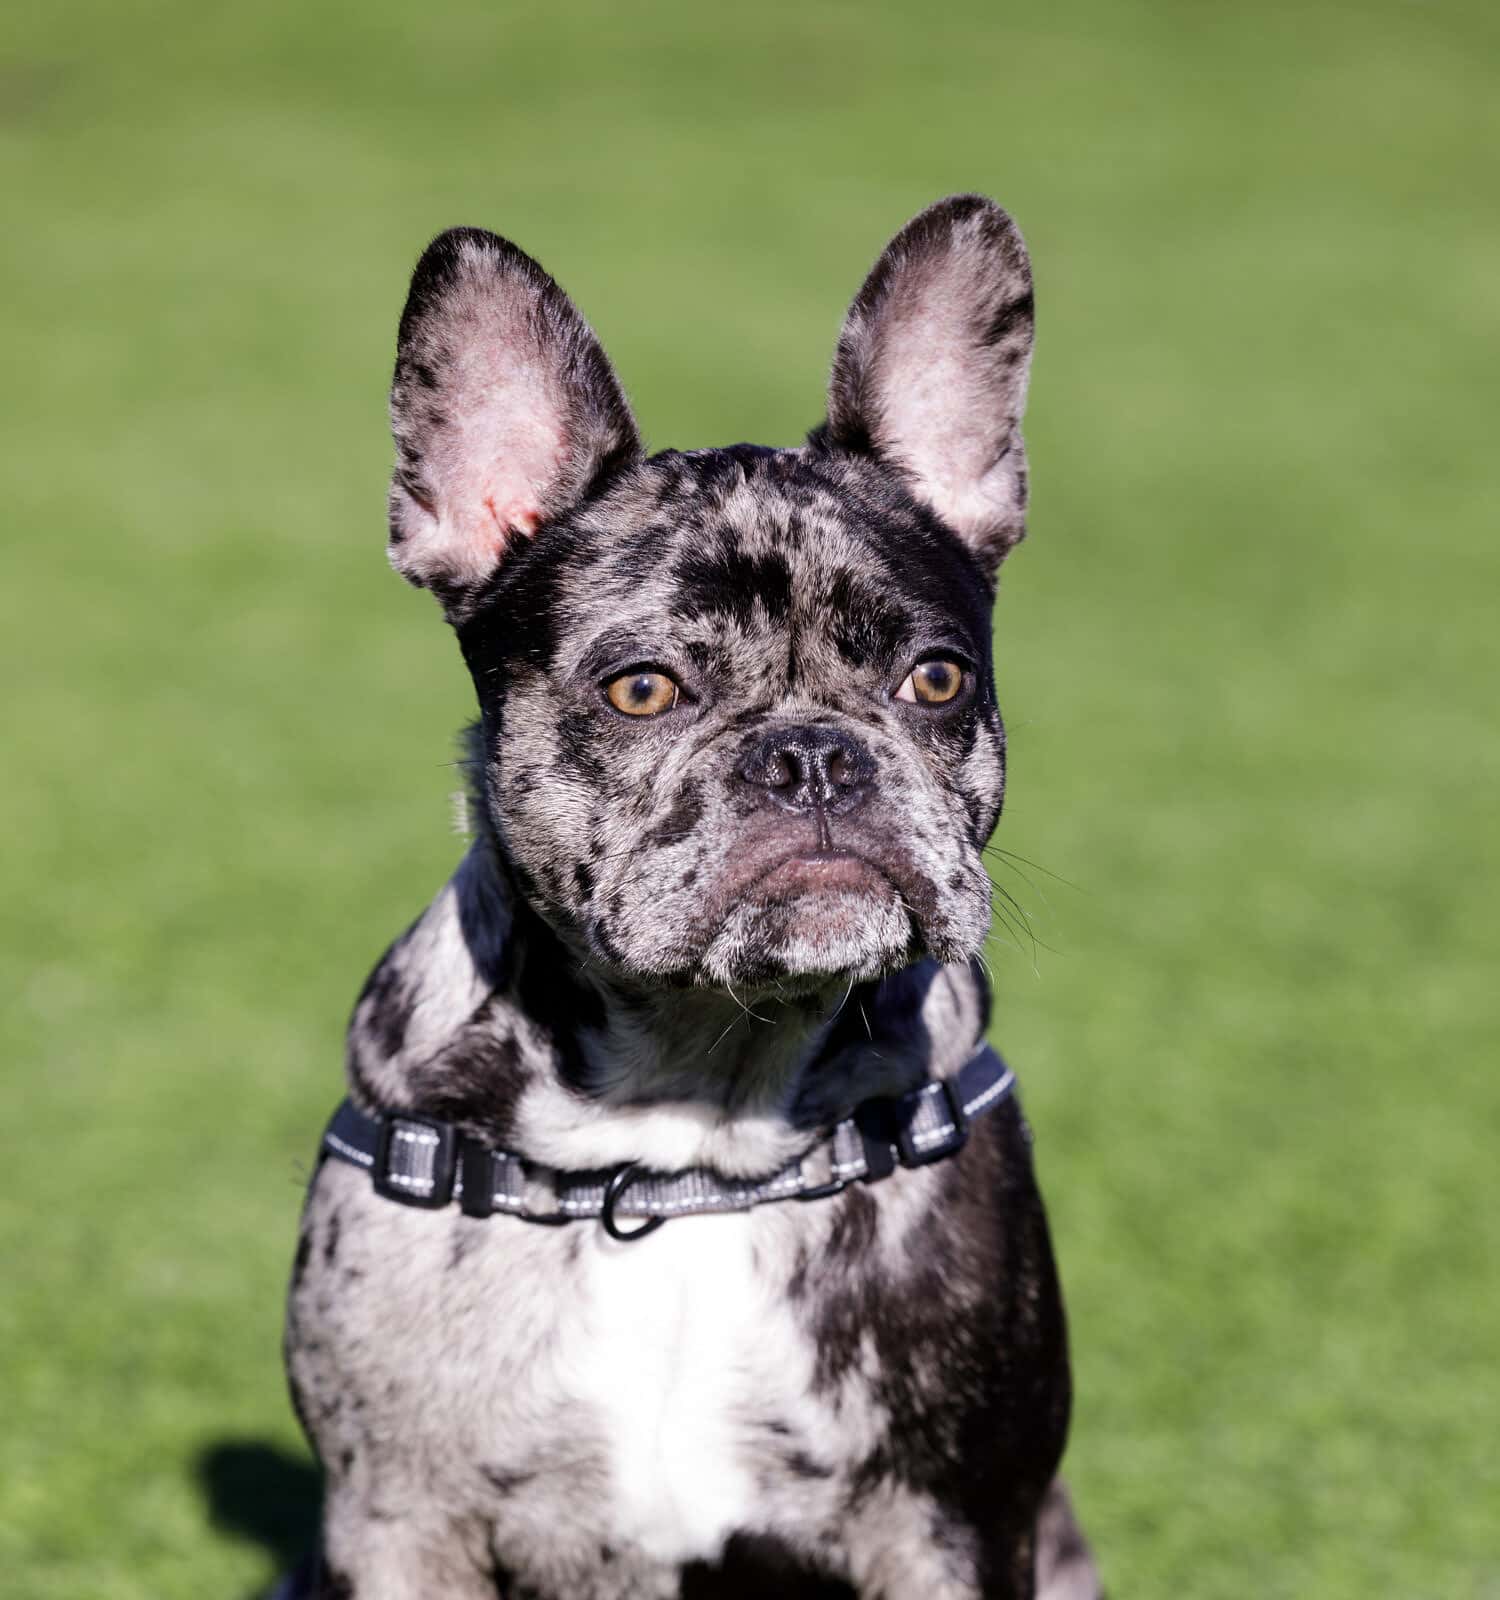 Black Merle French Bulldog Puppy. Off-leash dog park in Northern California.